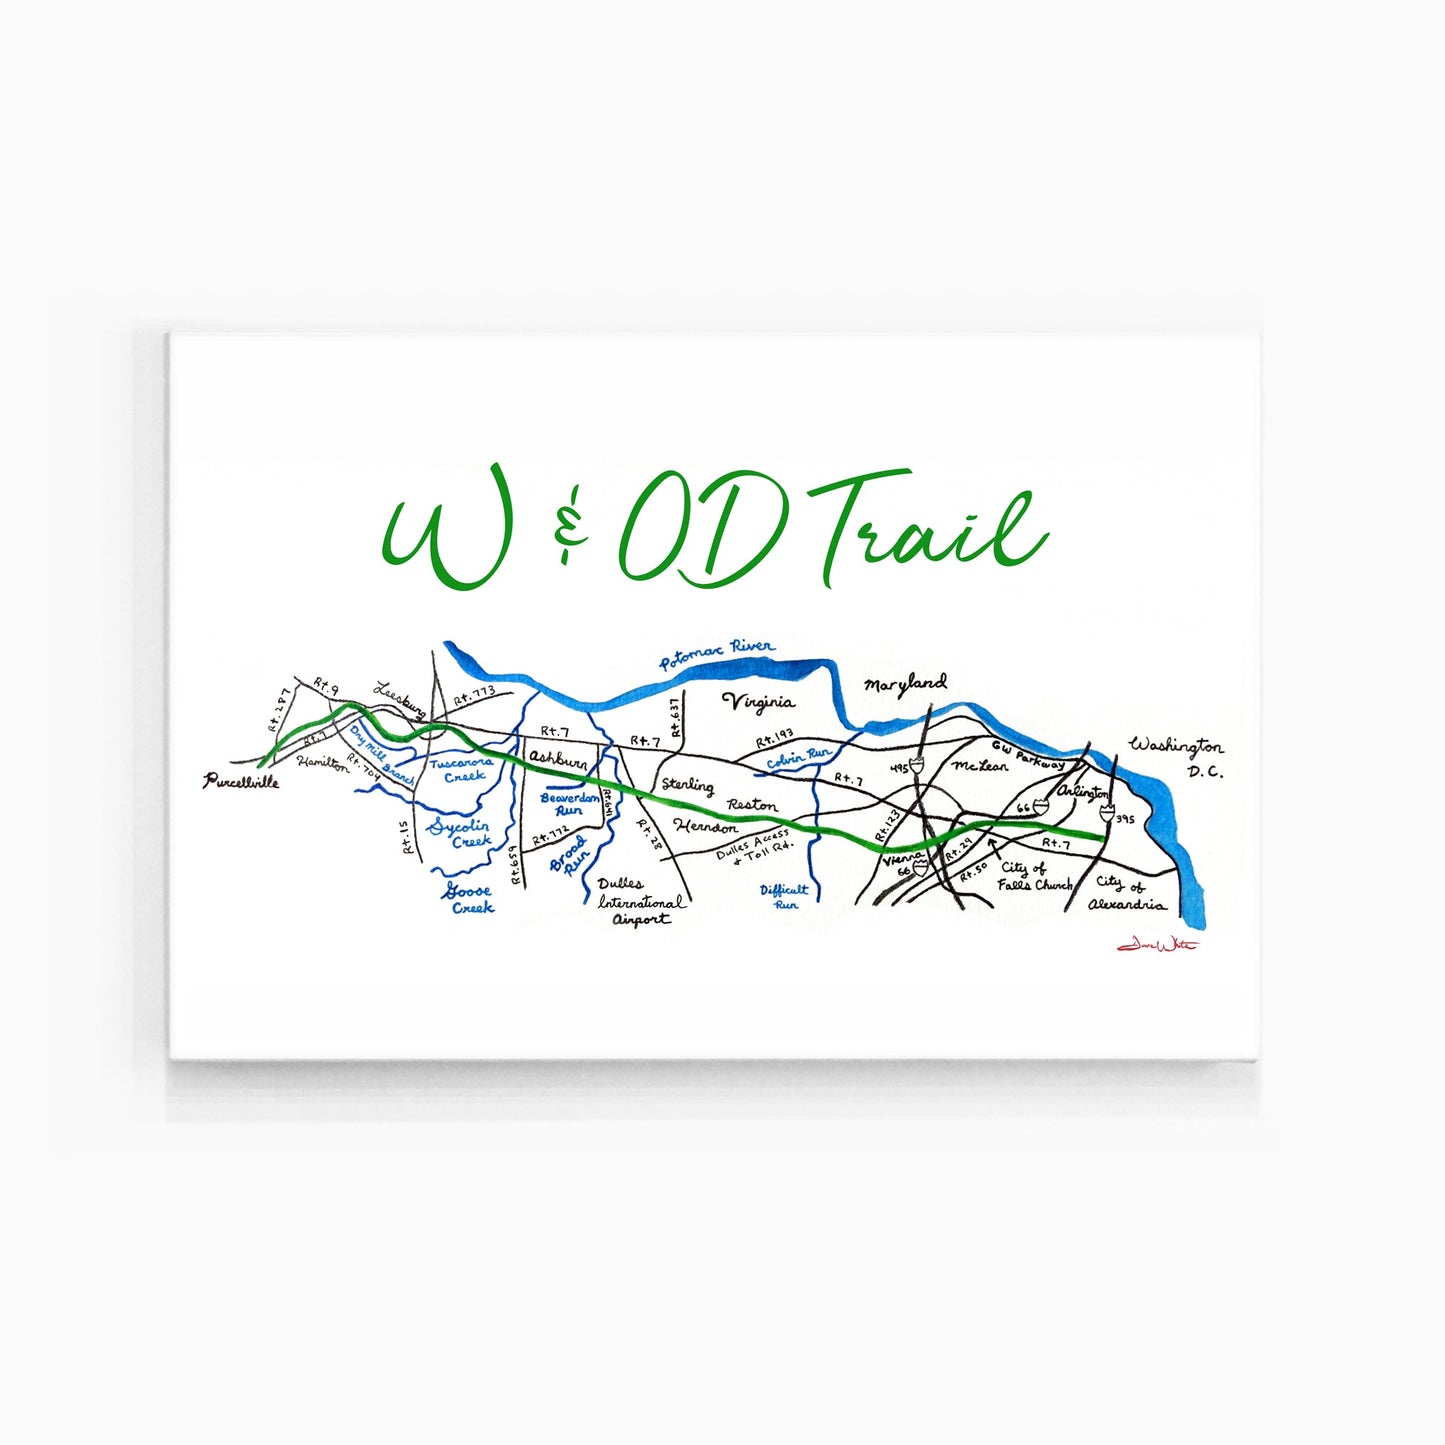 W&OD Trail Map Art Print - Dave White Artist